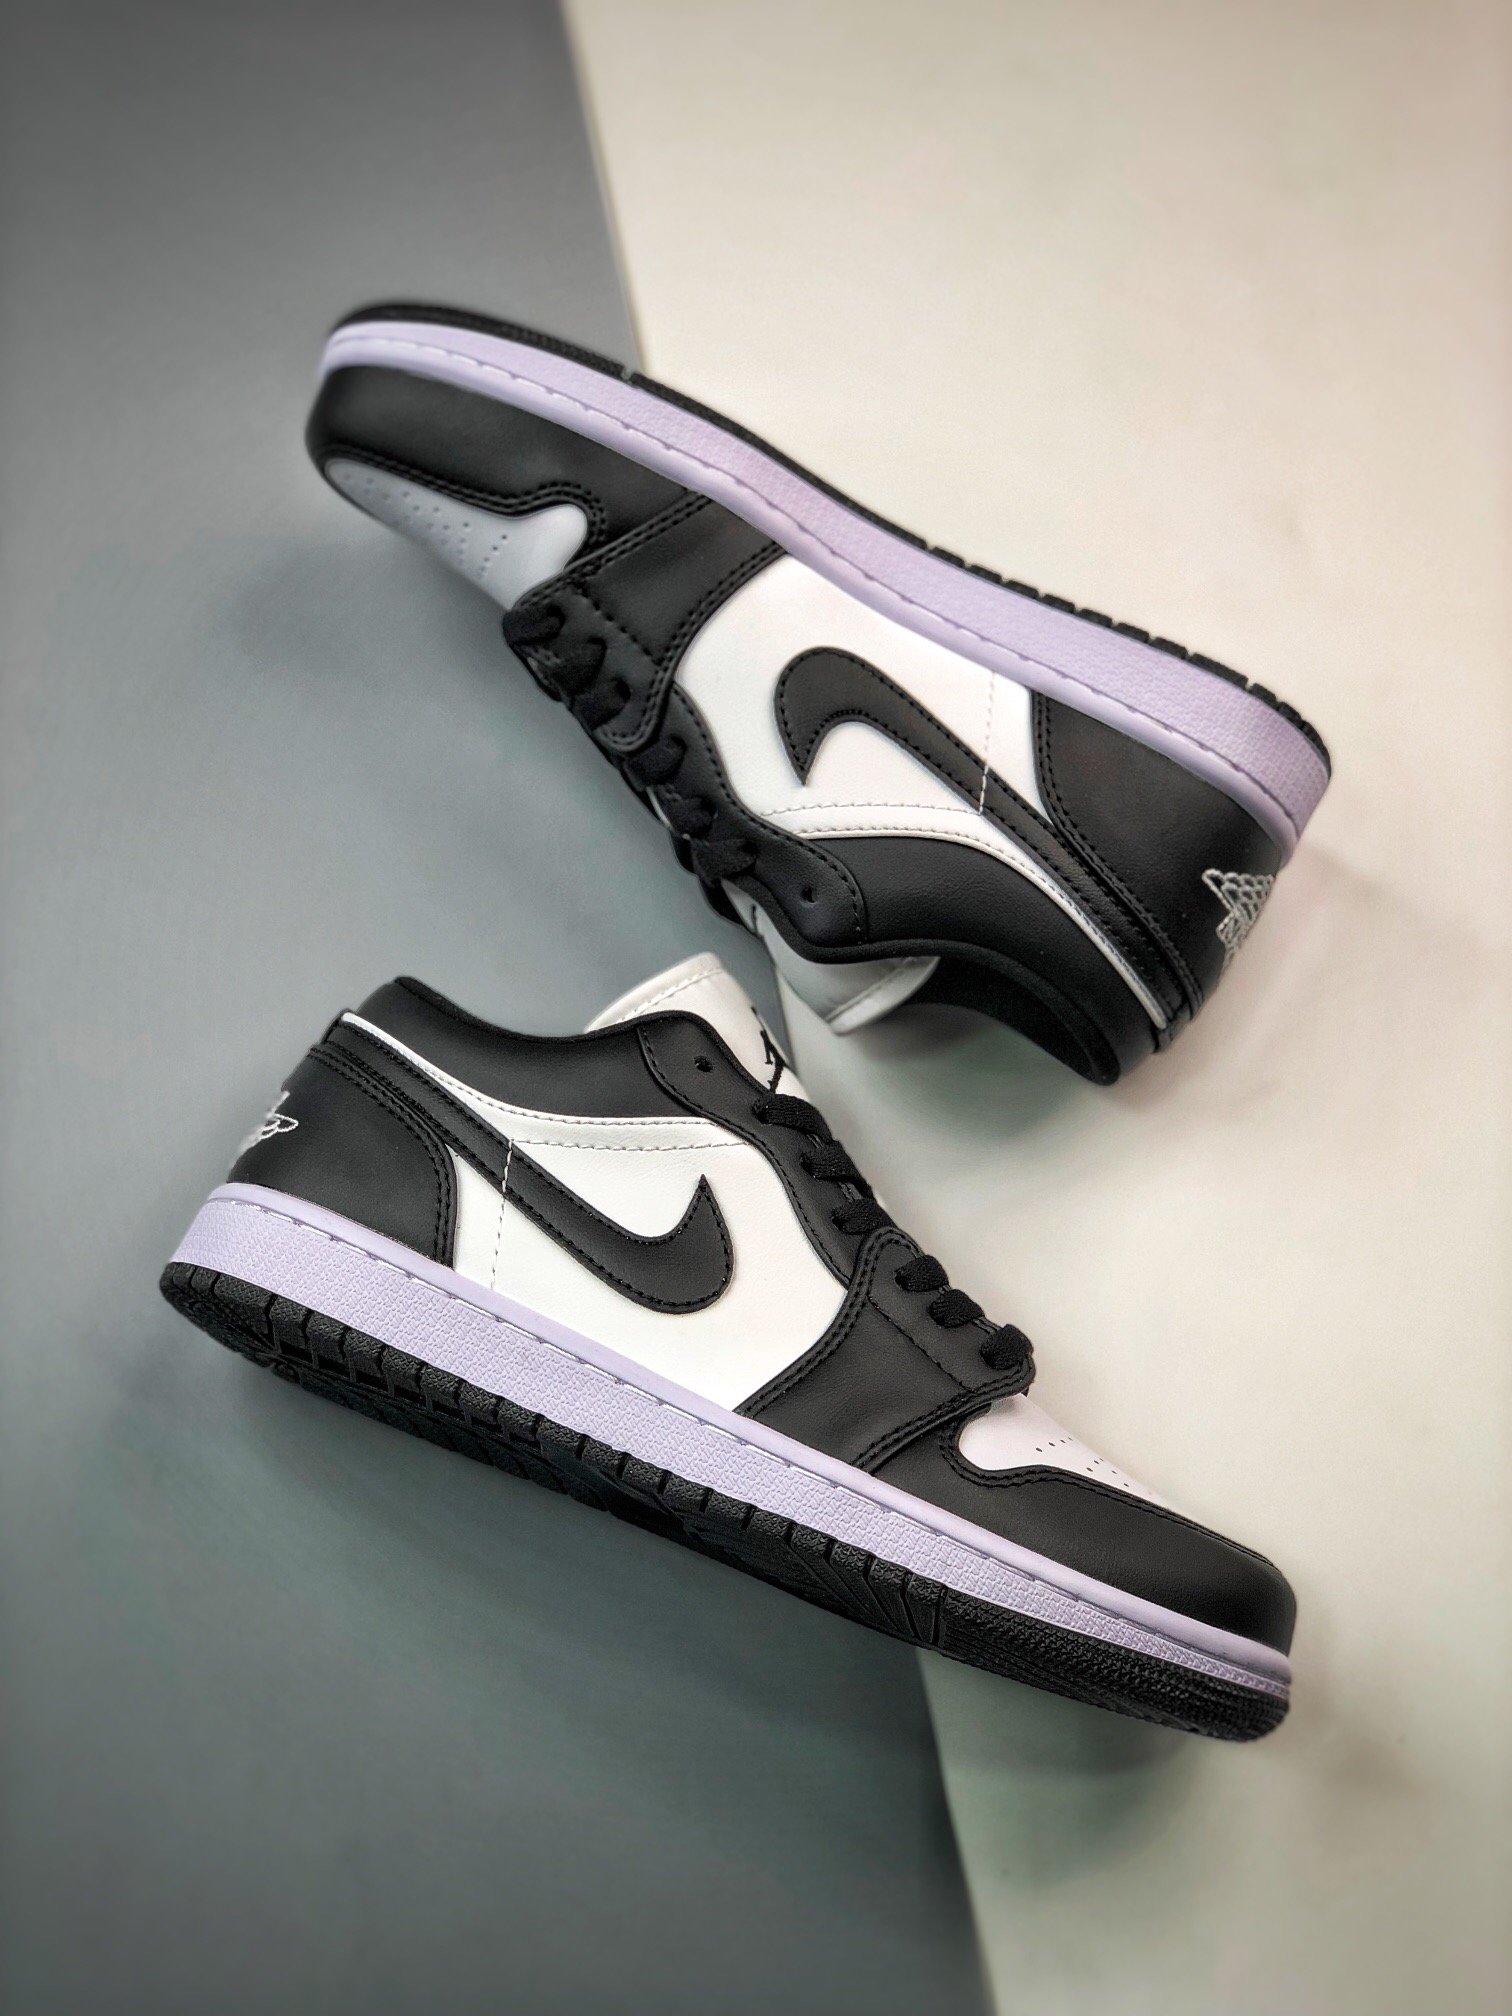 Giày Nike Wmns Air Jordan 1 Low ‘Panda’ DC0774 101